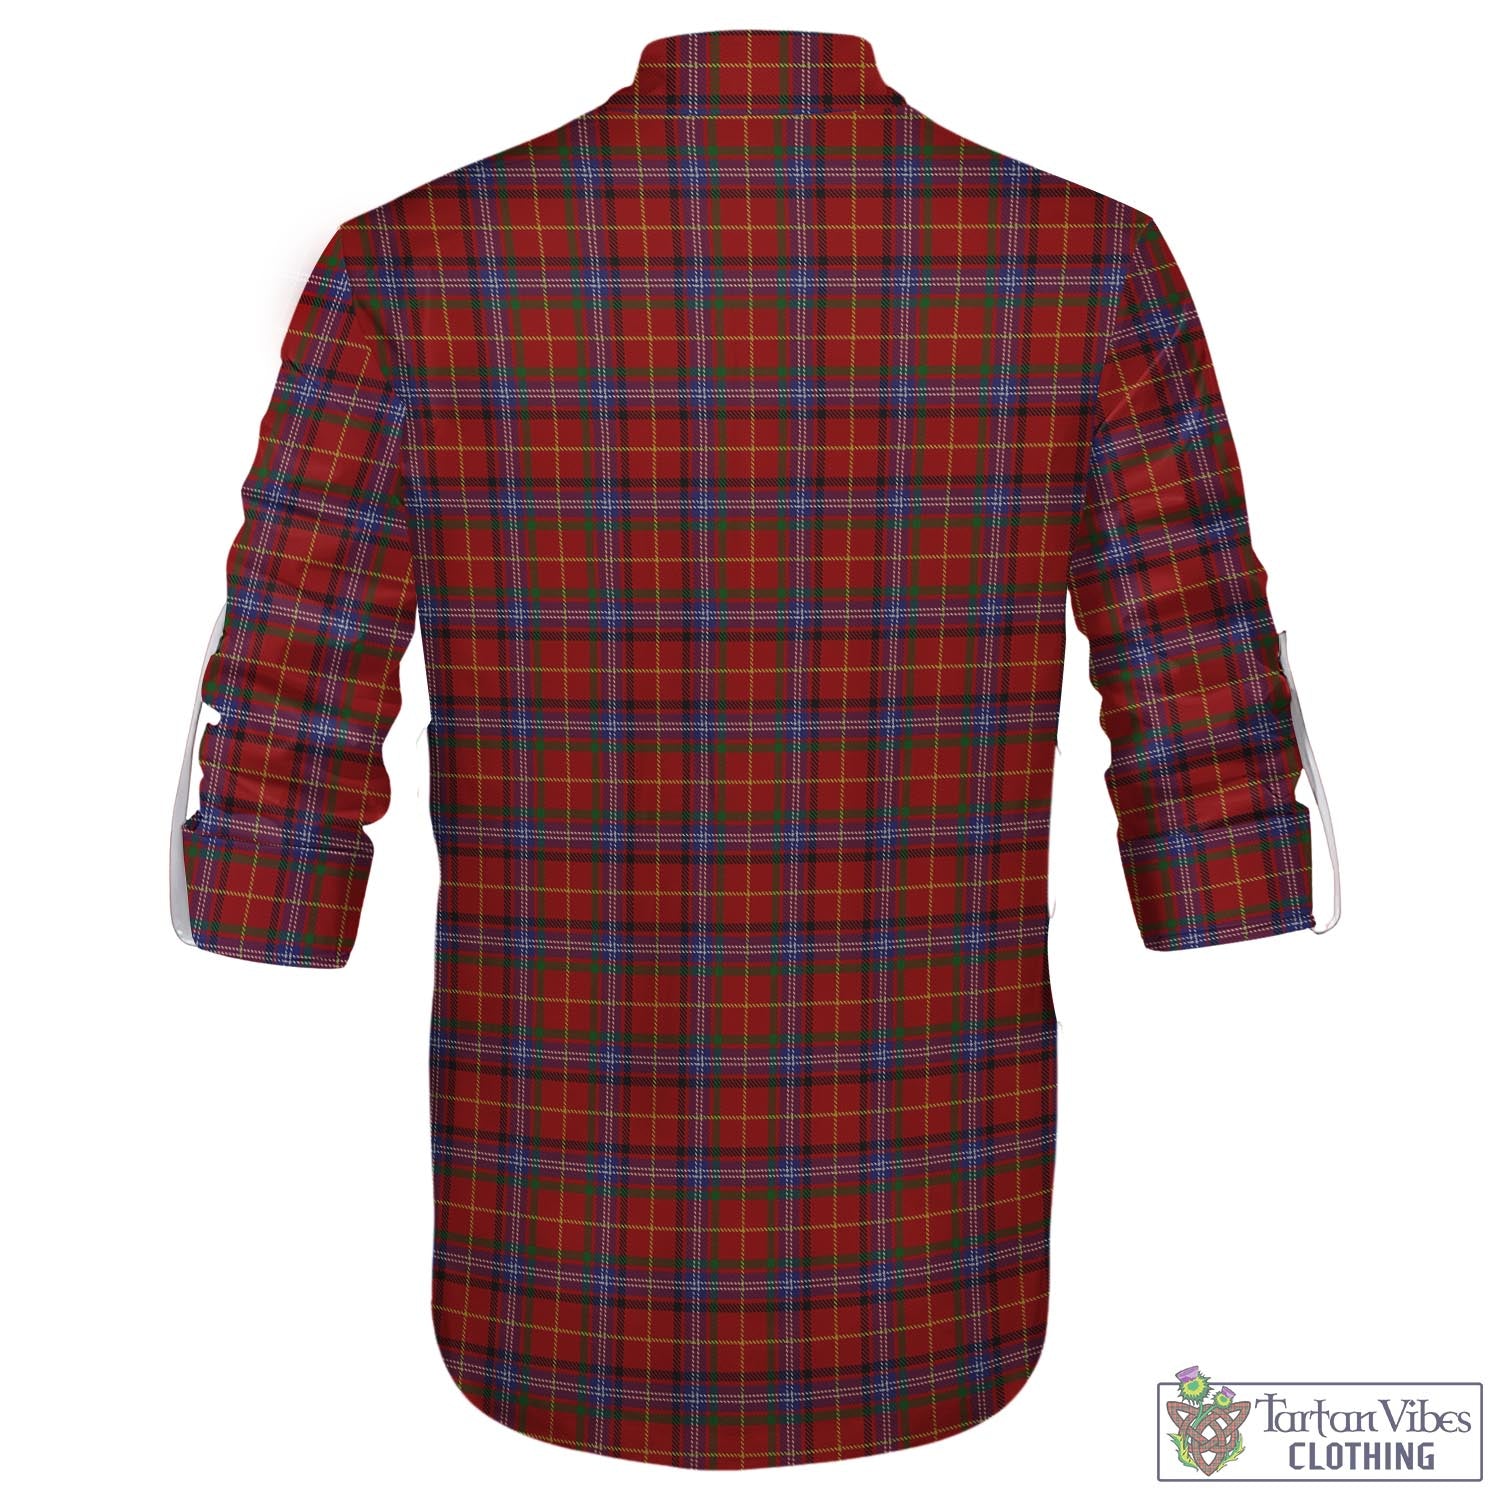 Tartan Vibes Clothing Maynard Tartan Men's Scottish Traditional Jacobite Ghillie Kilt Shirt